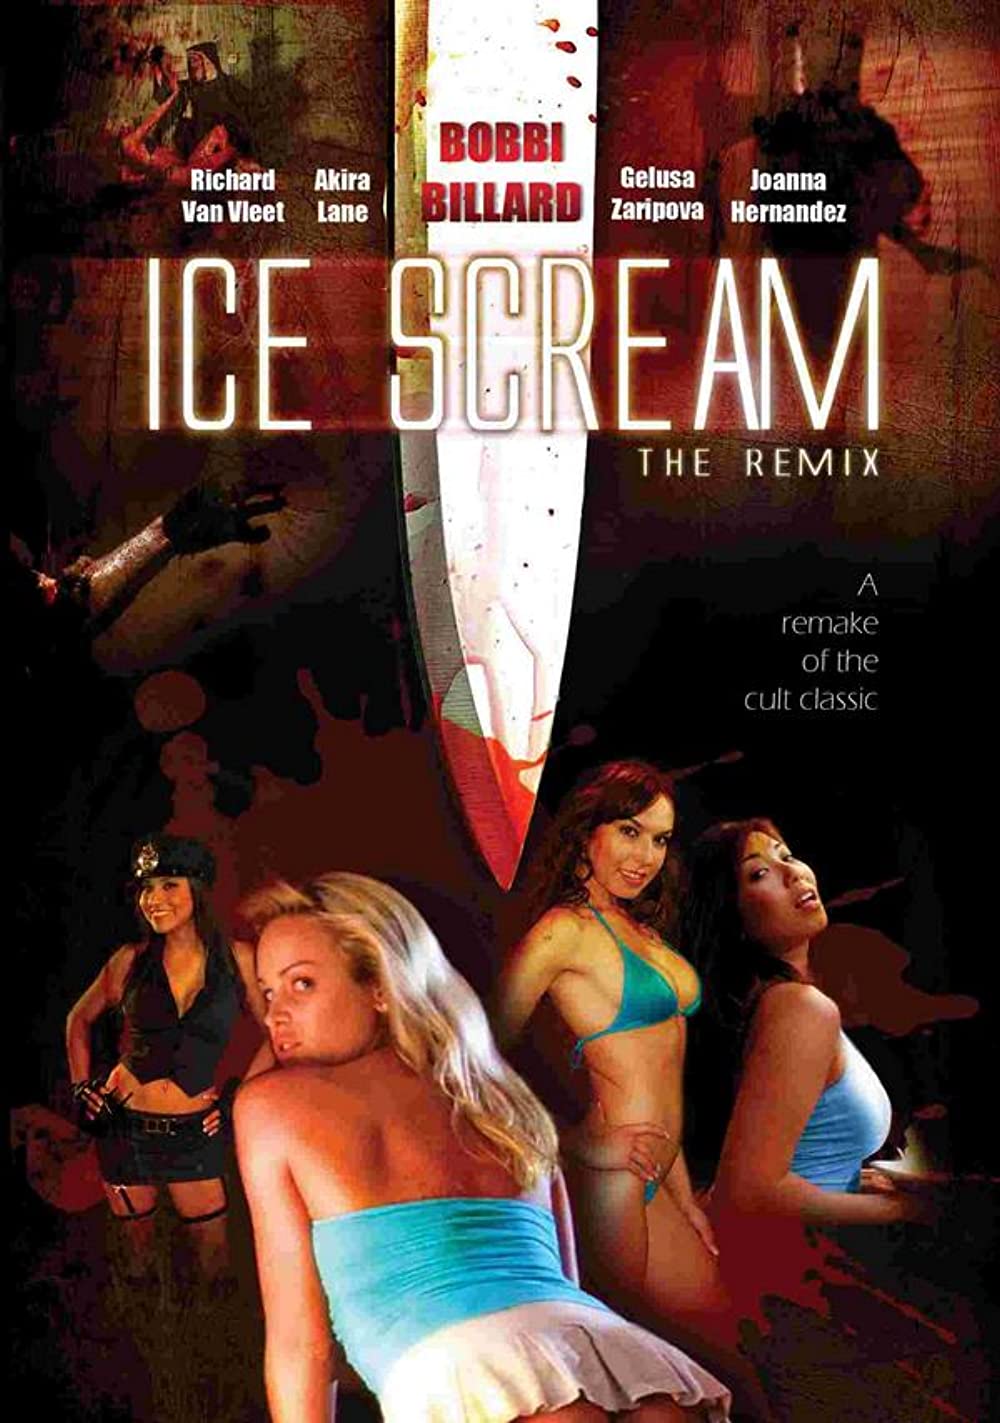 Download Ice Scream: The ReMix Movie | Ice Scream: The Remix Download